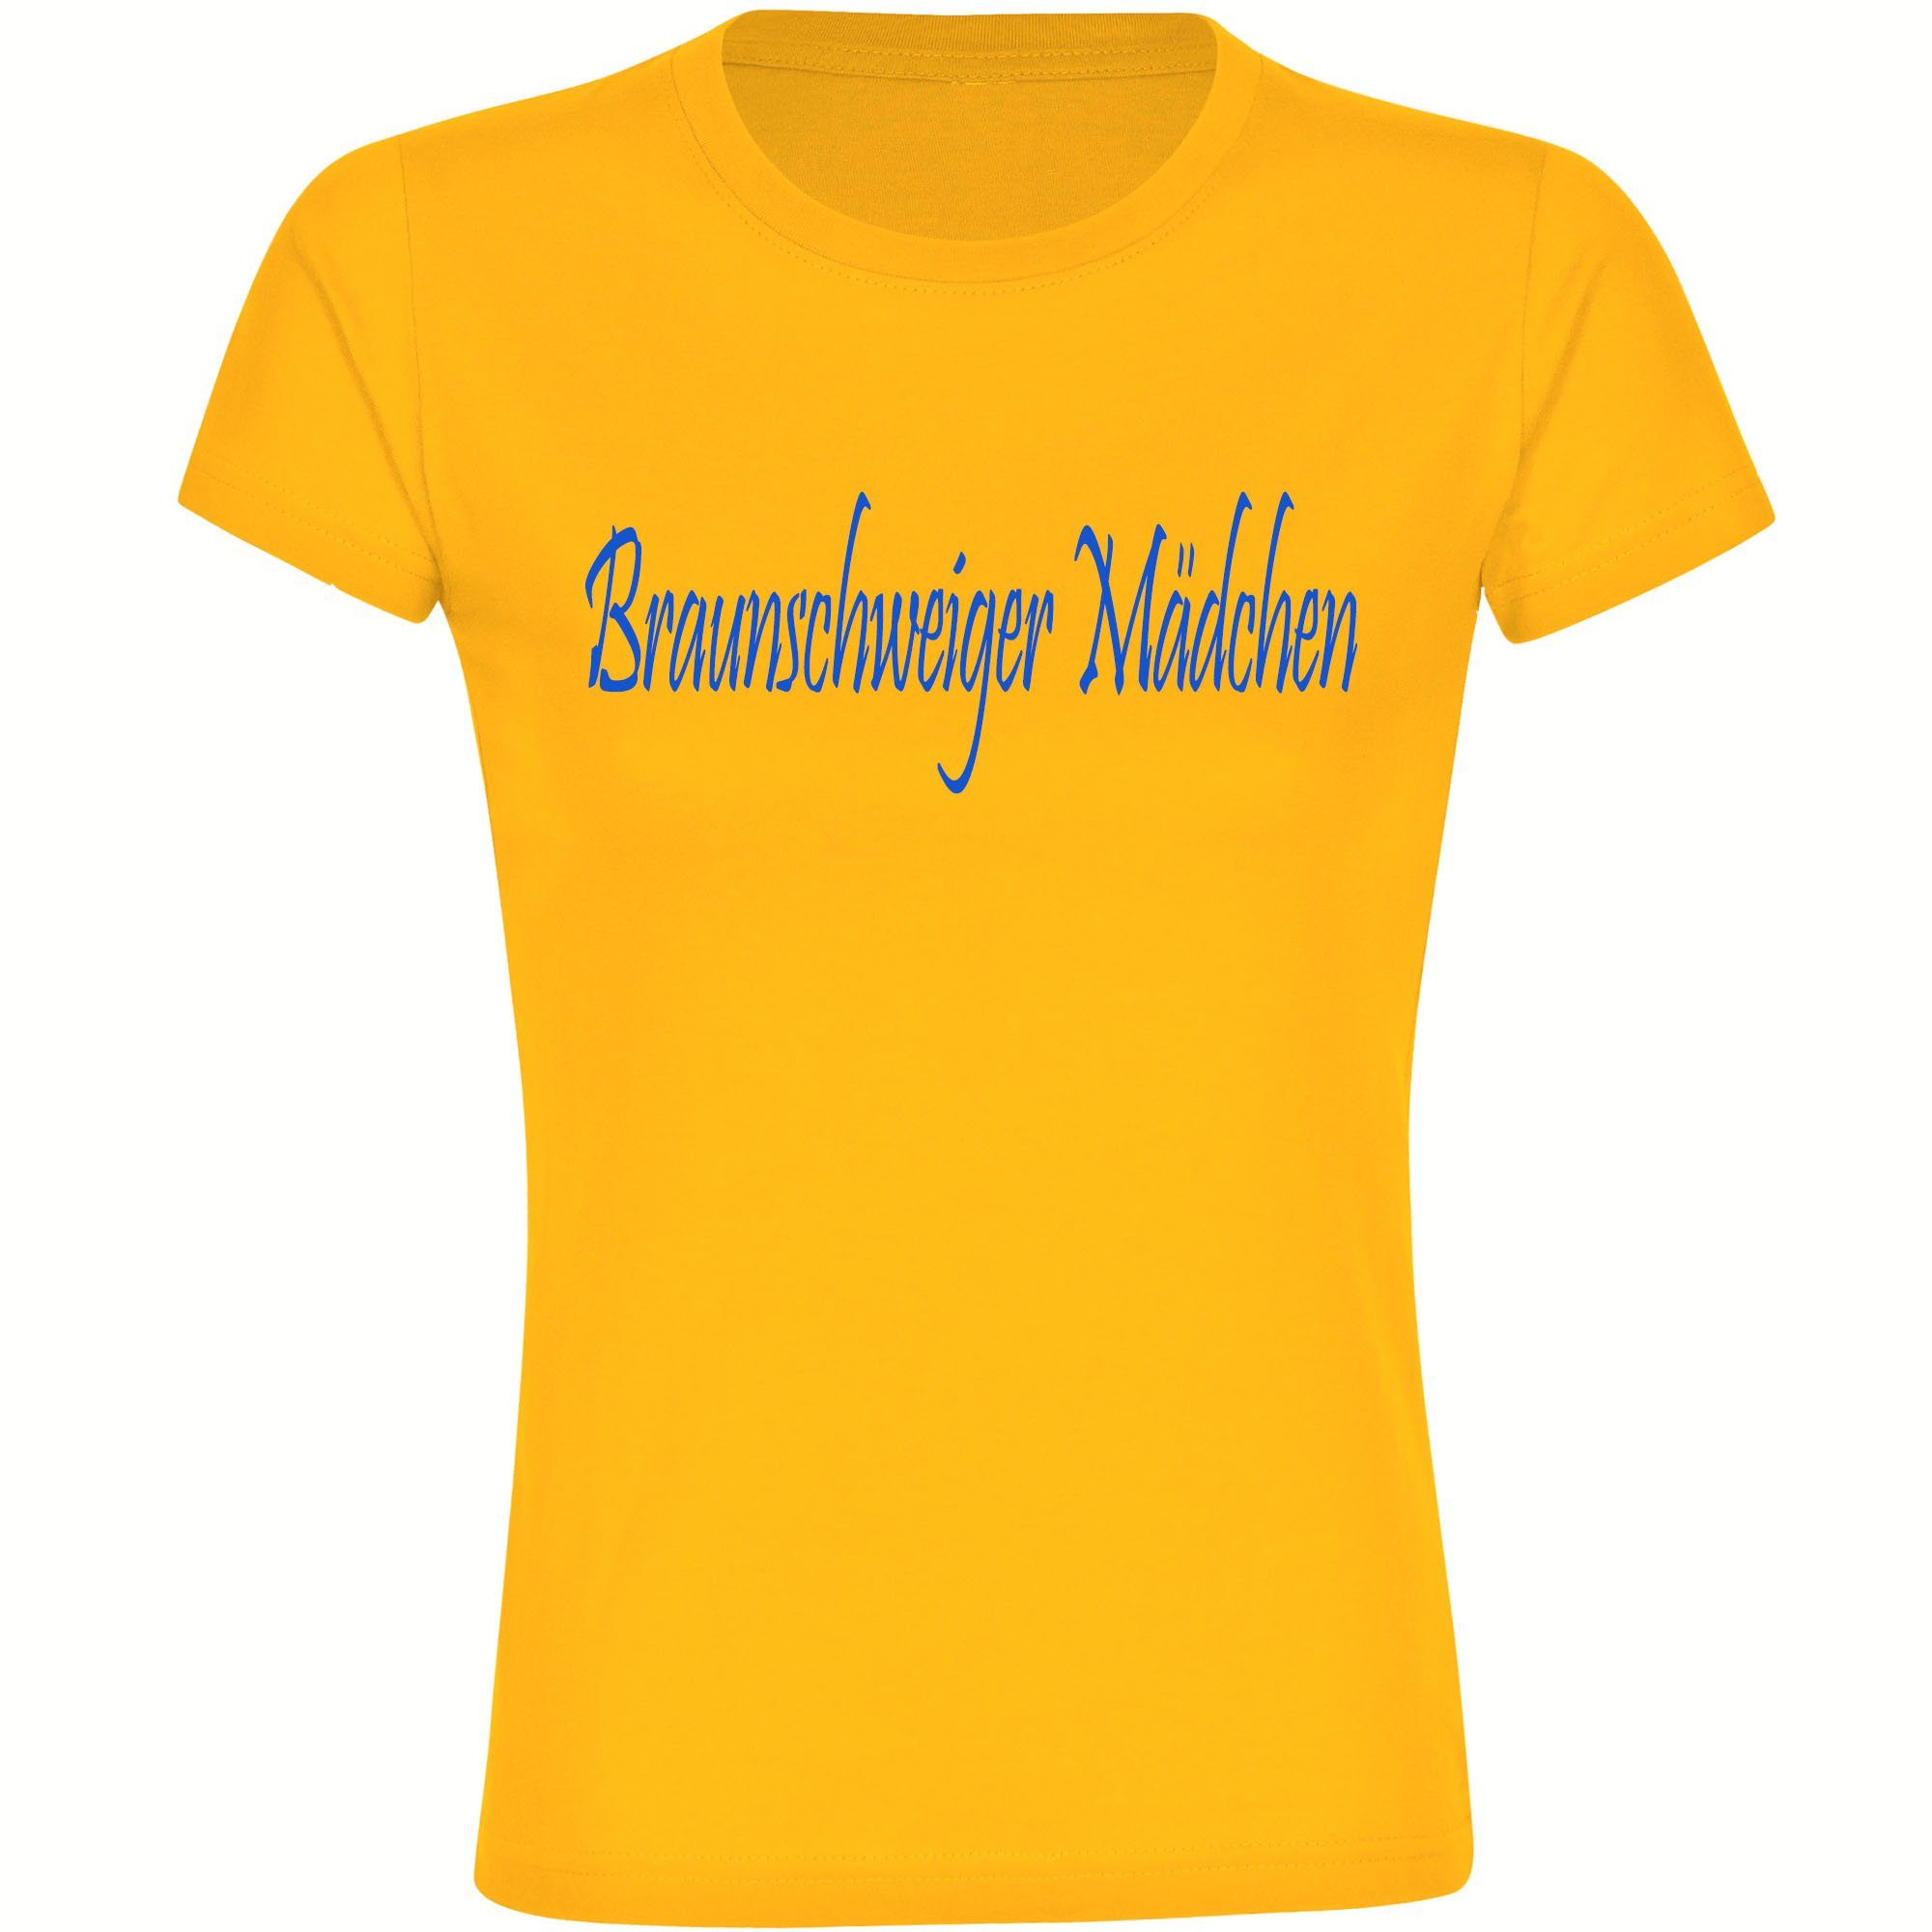 multifanshop T-Shirt Damen Braunschweig - Braunschweiger Mädchen - Frauen